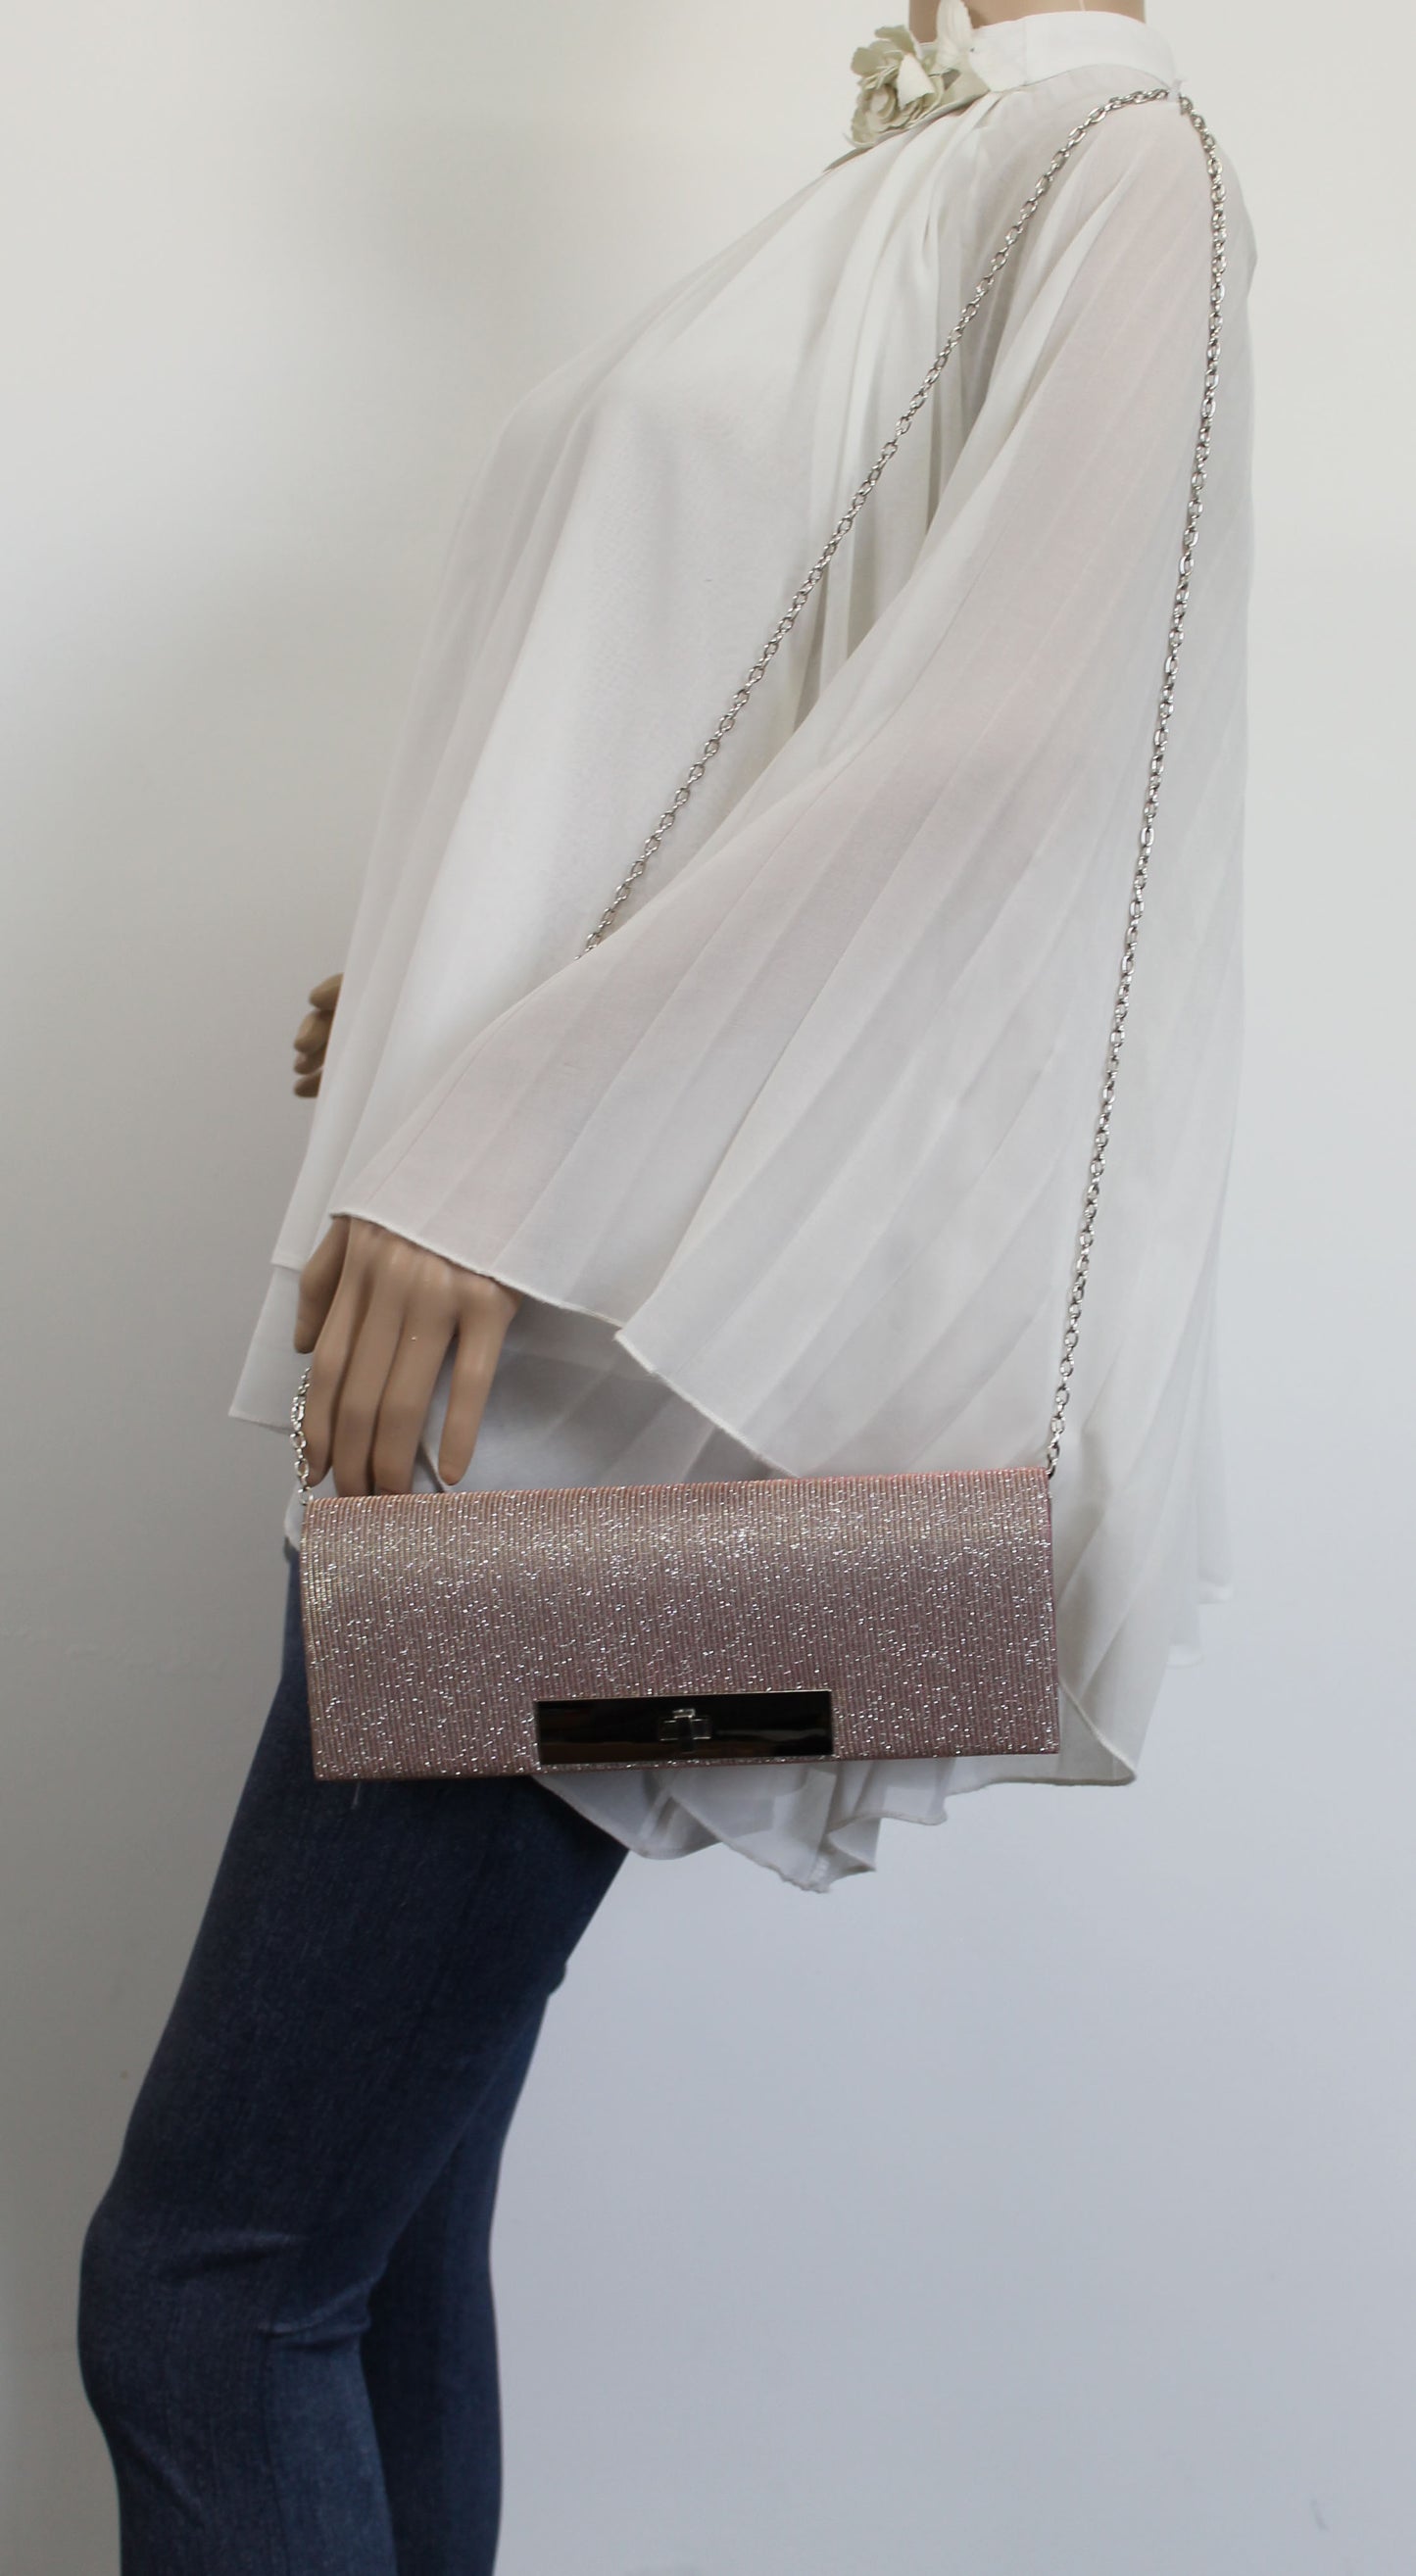 SWANKYSWANS Janet Glitter Clutch Bag Pink Cute Cheap Clutch Bag For Weddings School and Work